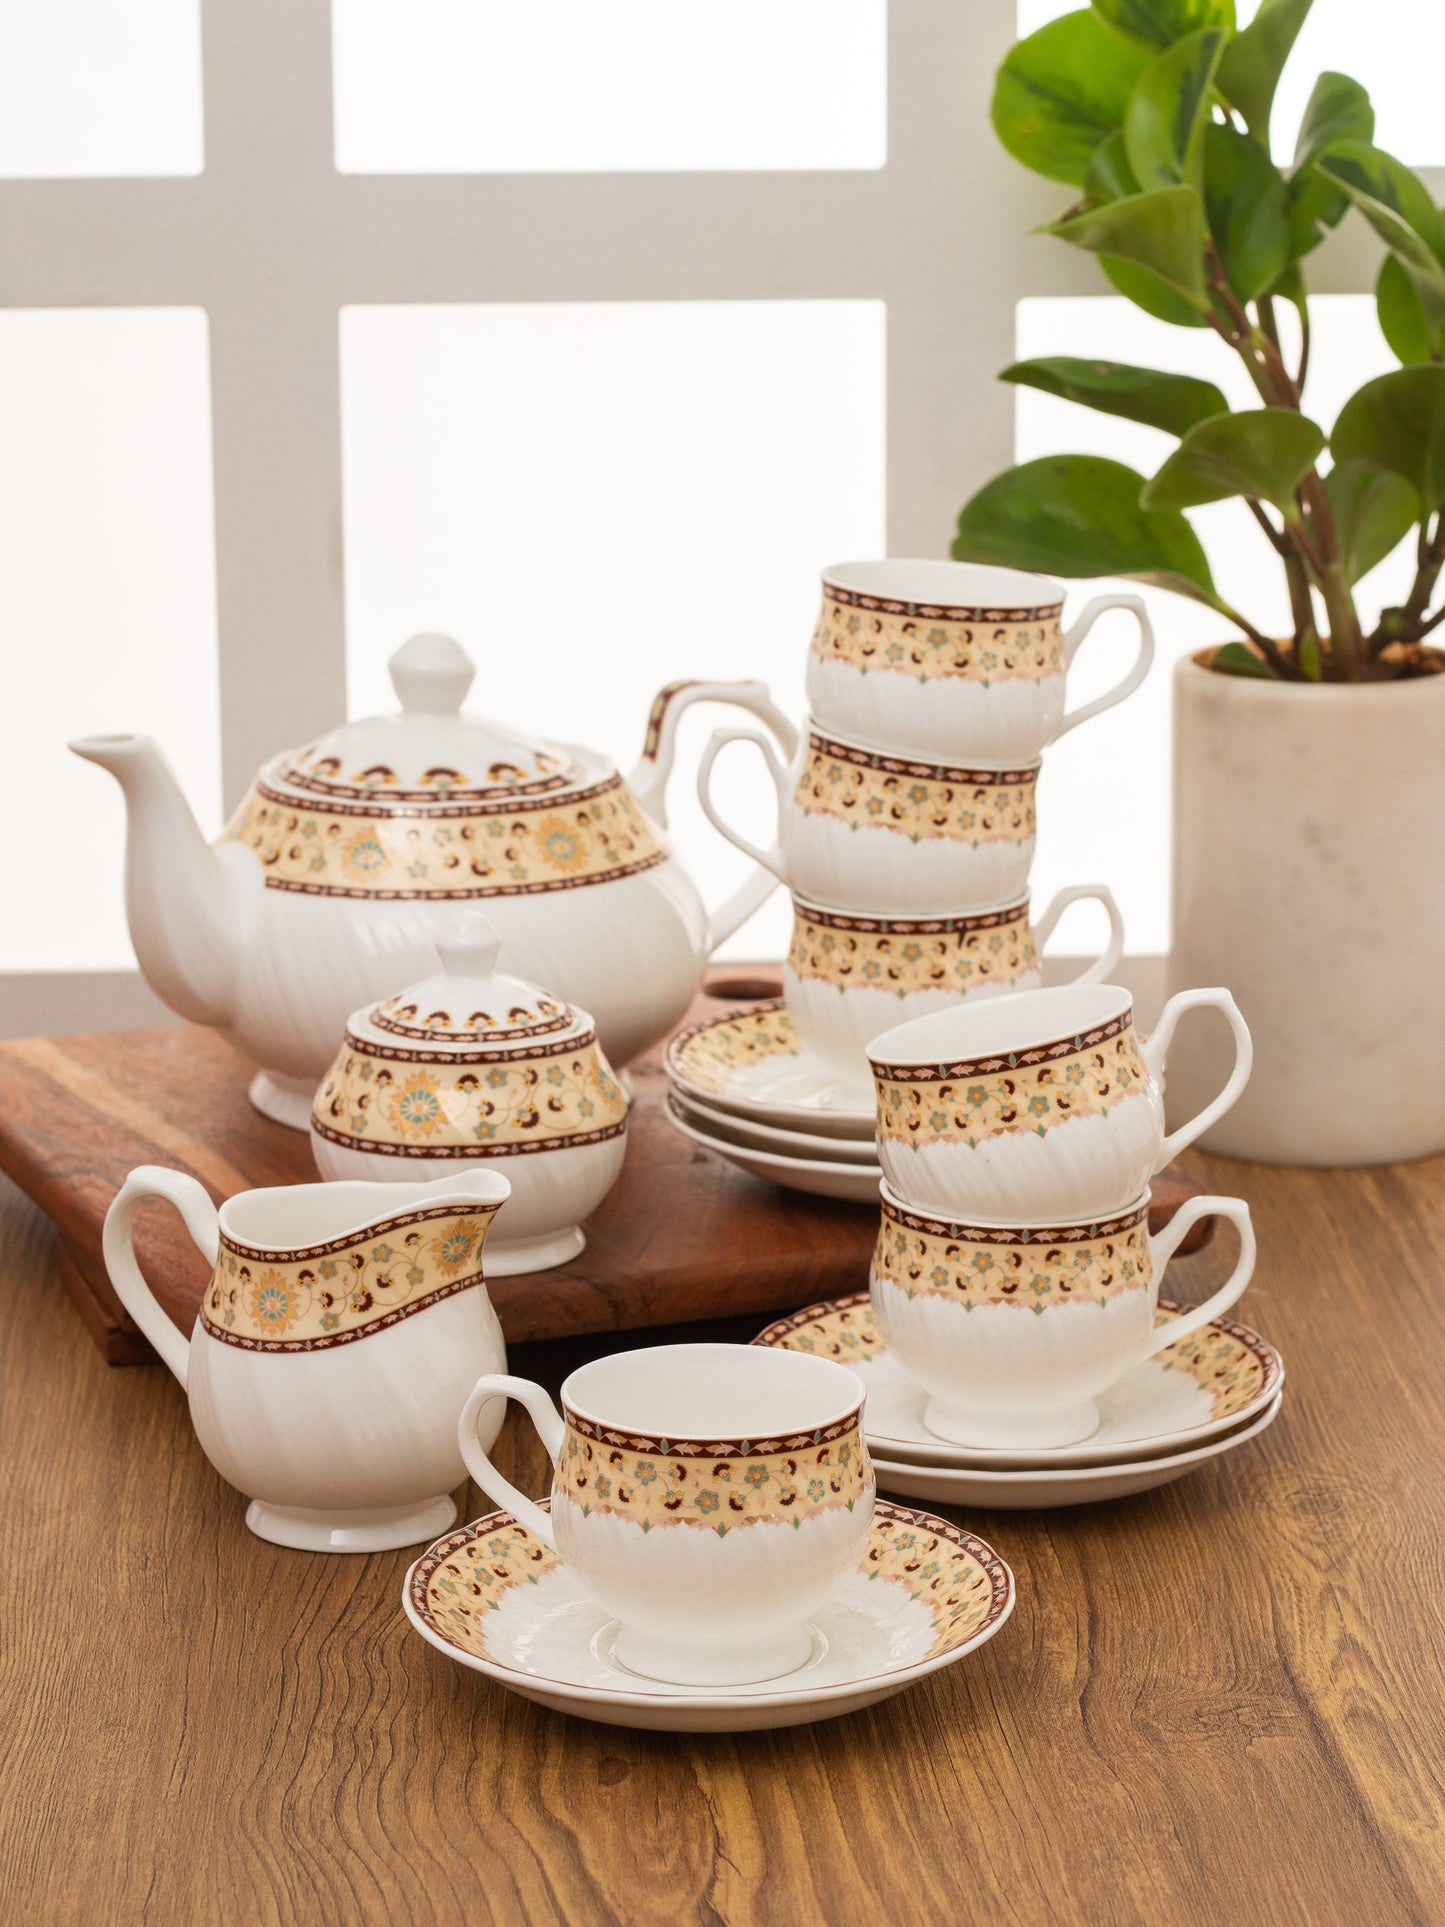 Karina Lloyds Tea Set of 15 (S365)